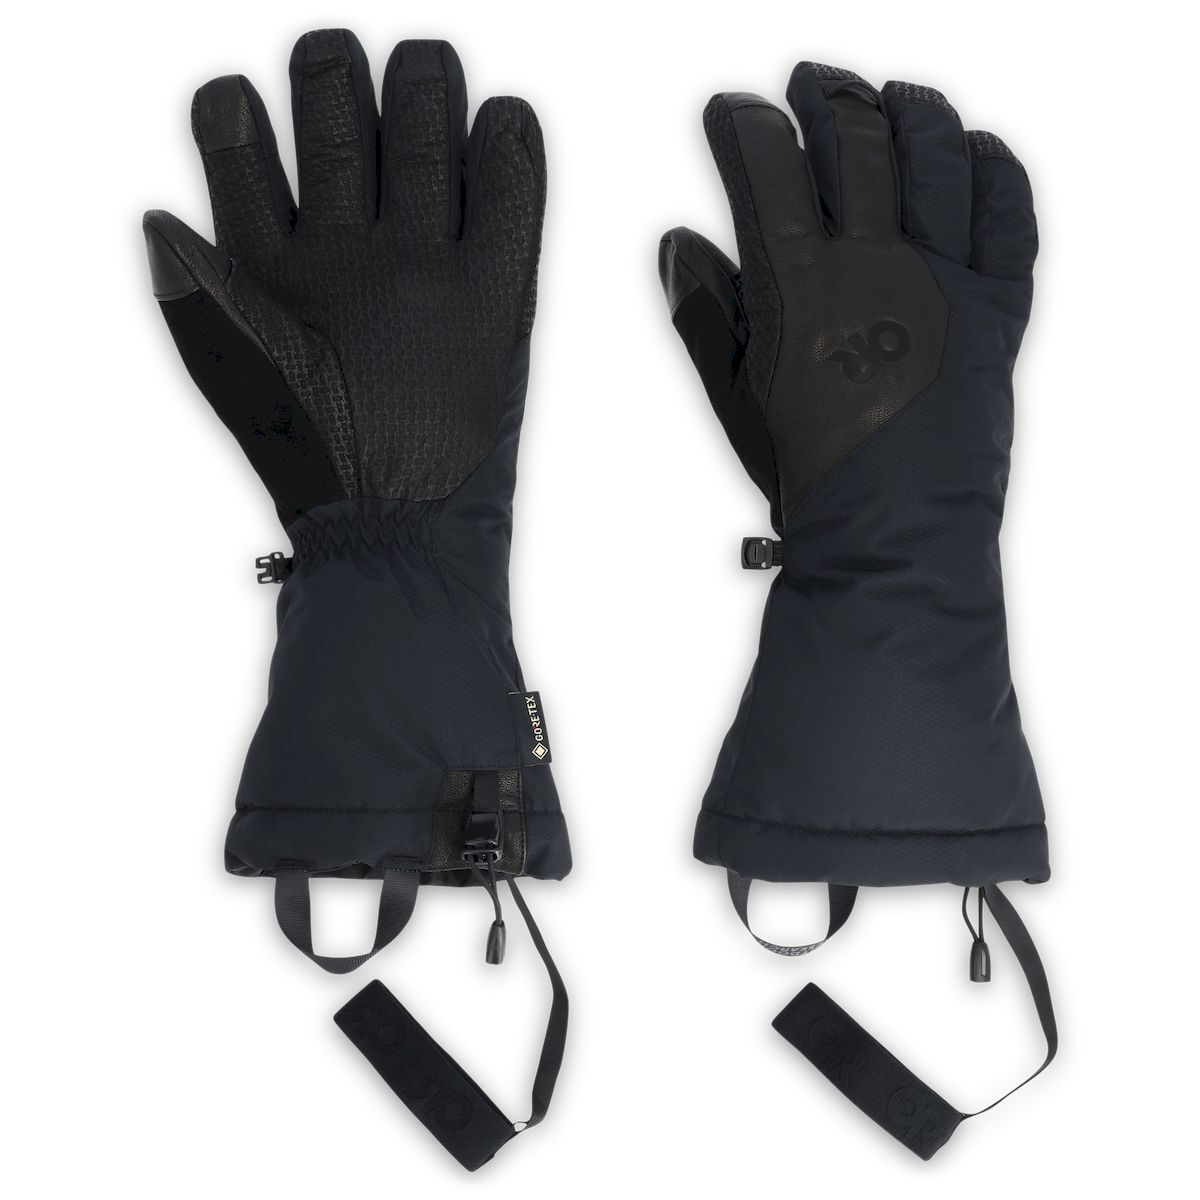 Outdoor Research Super Couloir SensGloves - Guantes de esquí - Hombre